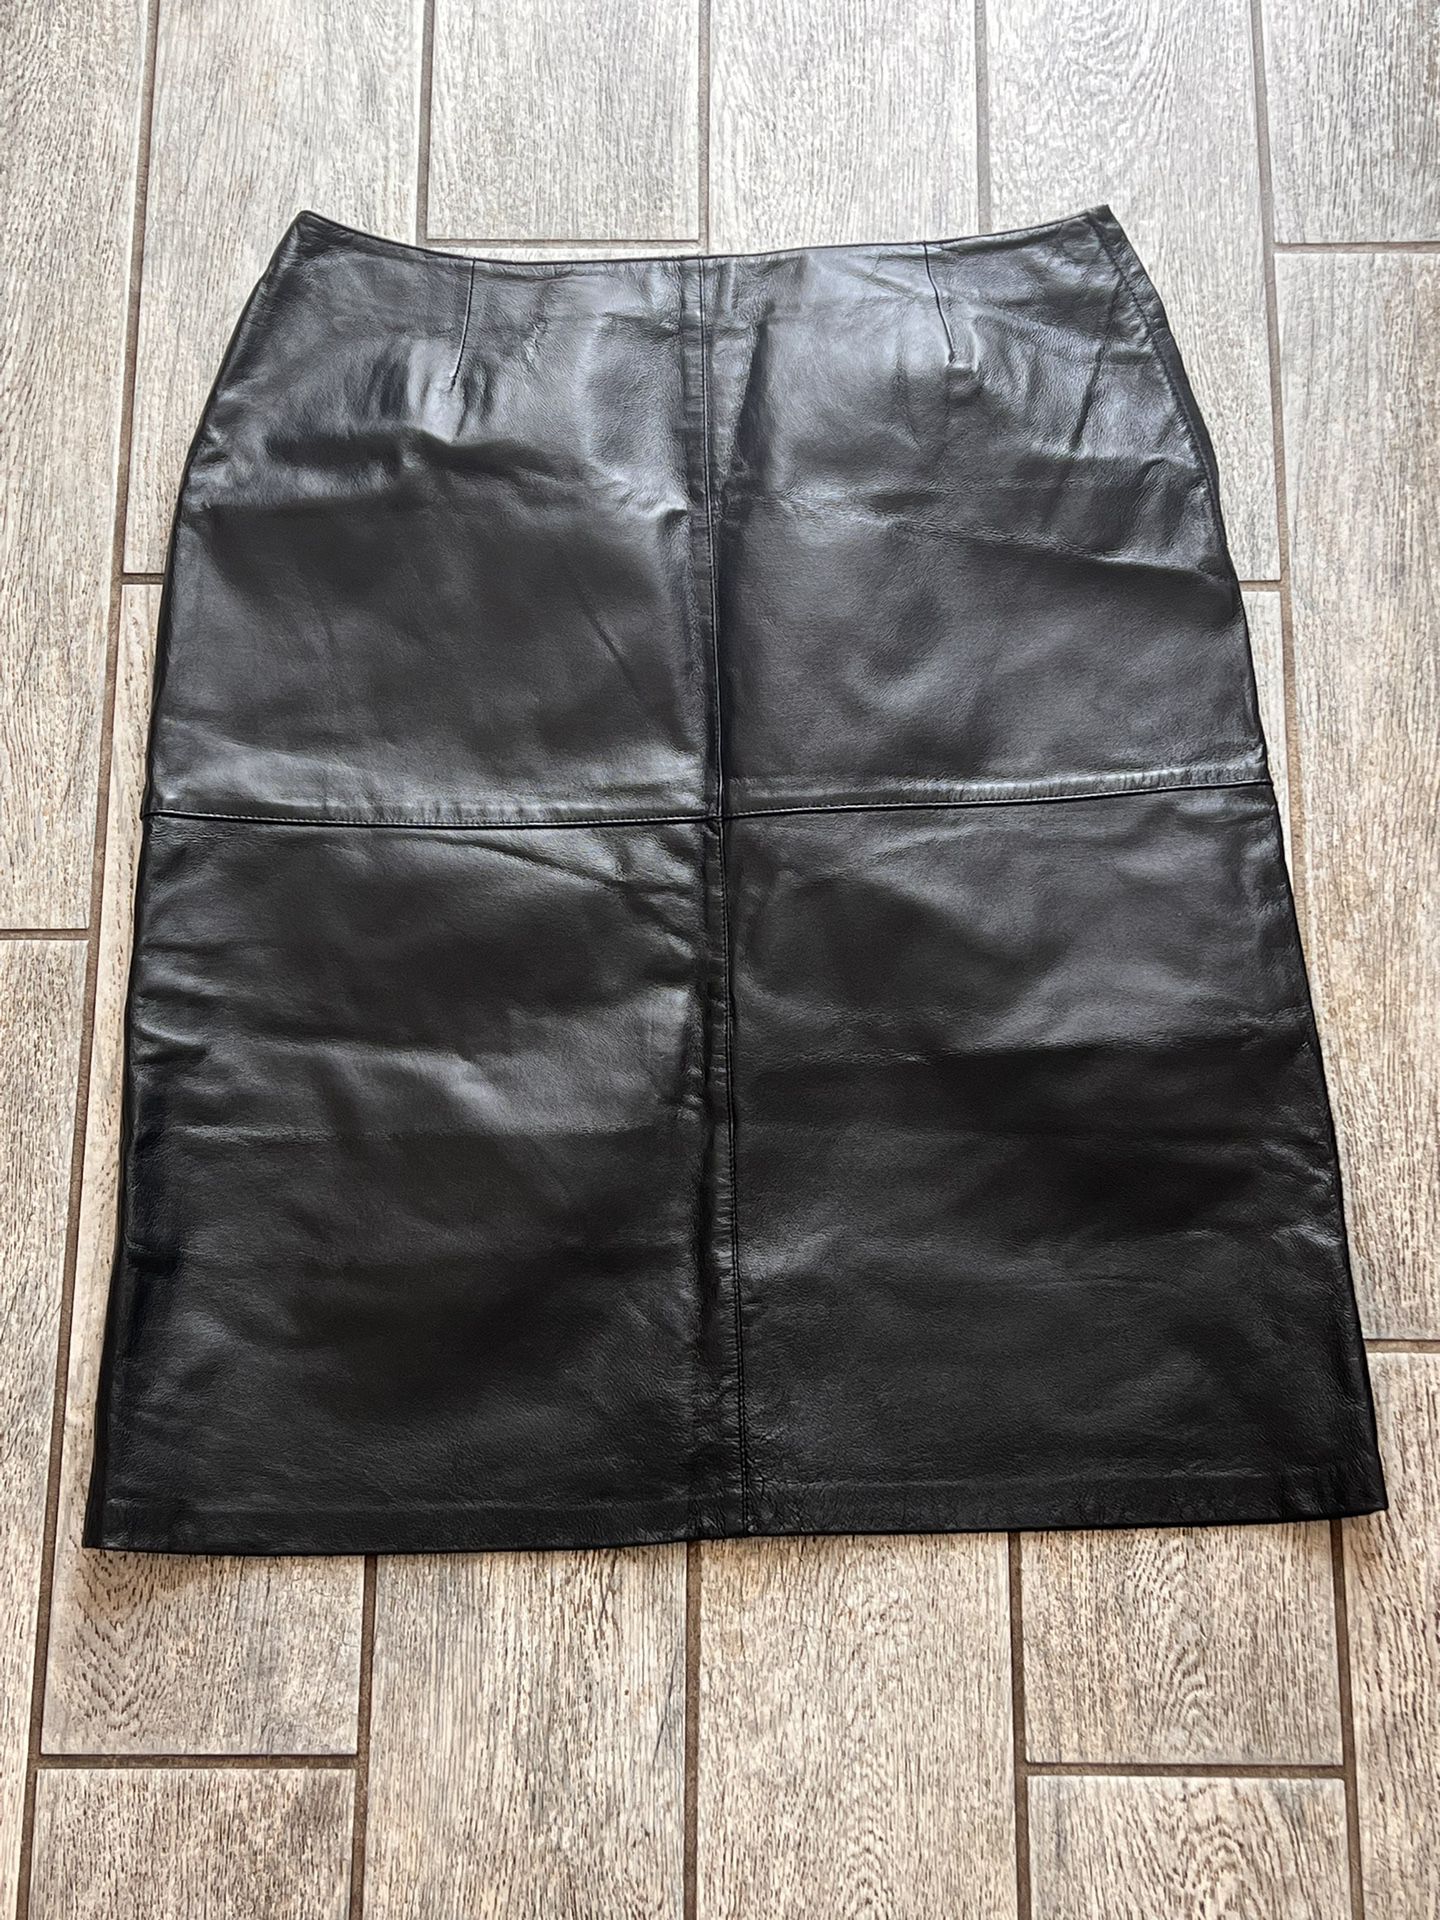 Nygard Black Leather Pencil Skirt Sz 16 